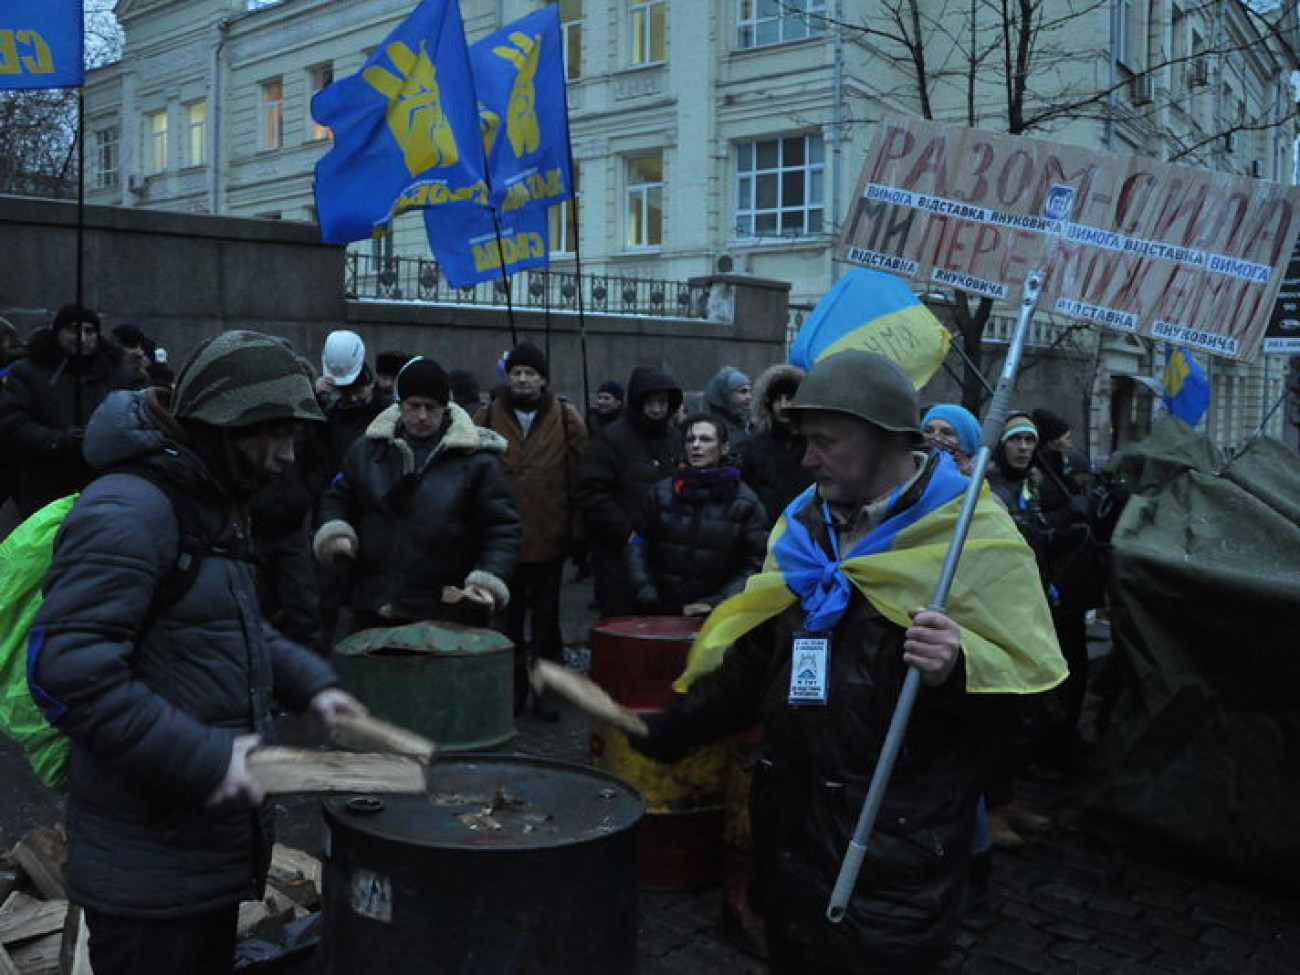 Евромайдановцы устанавливают палатки возле зданий власти, 8 декабря 2013г.